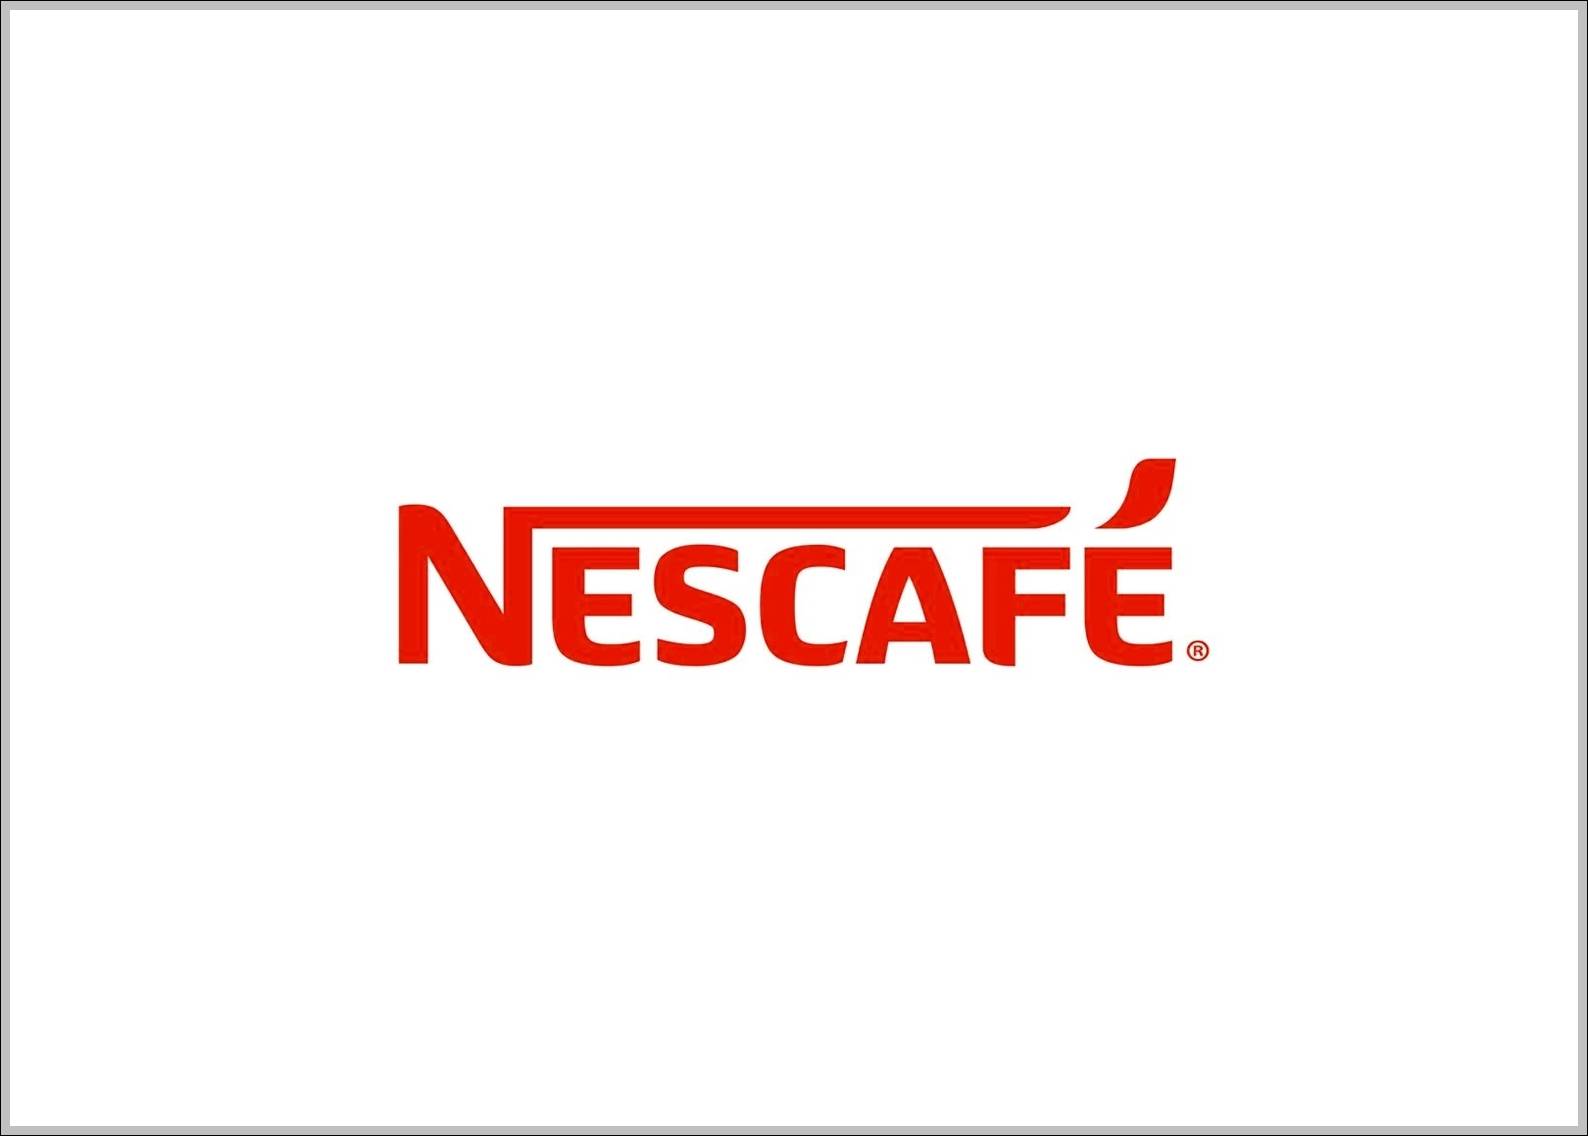 Nescafe logo 2014